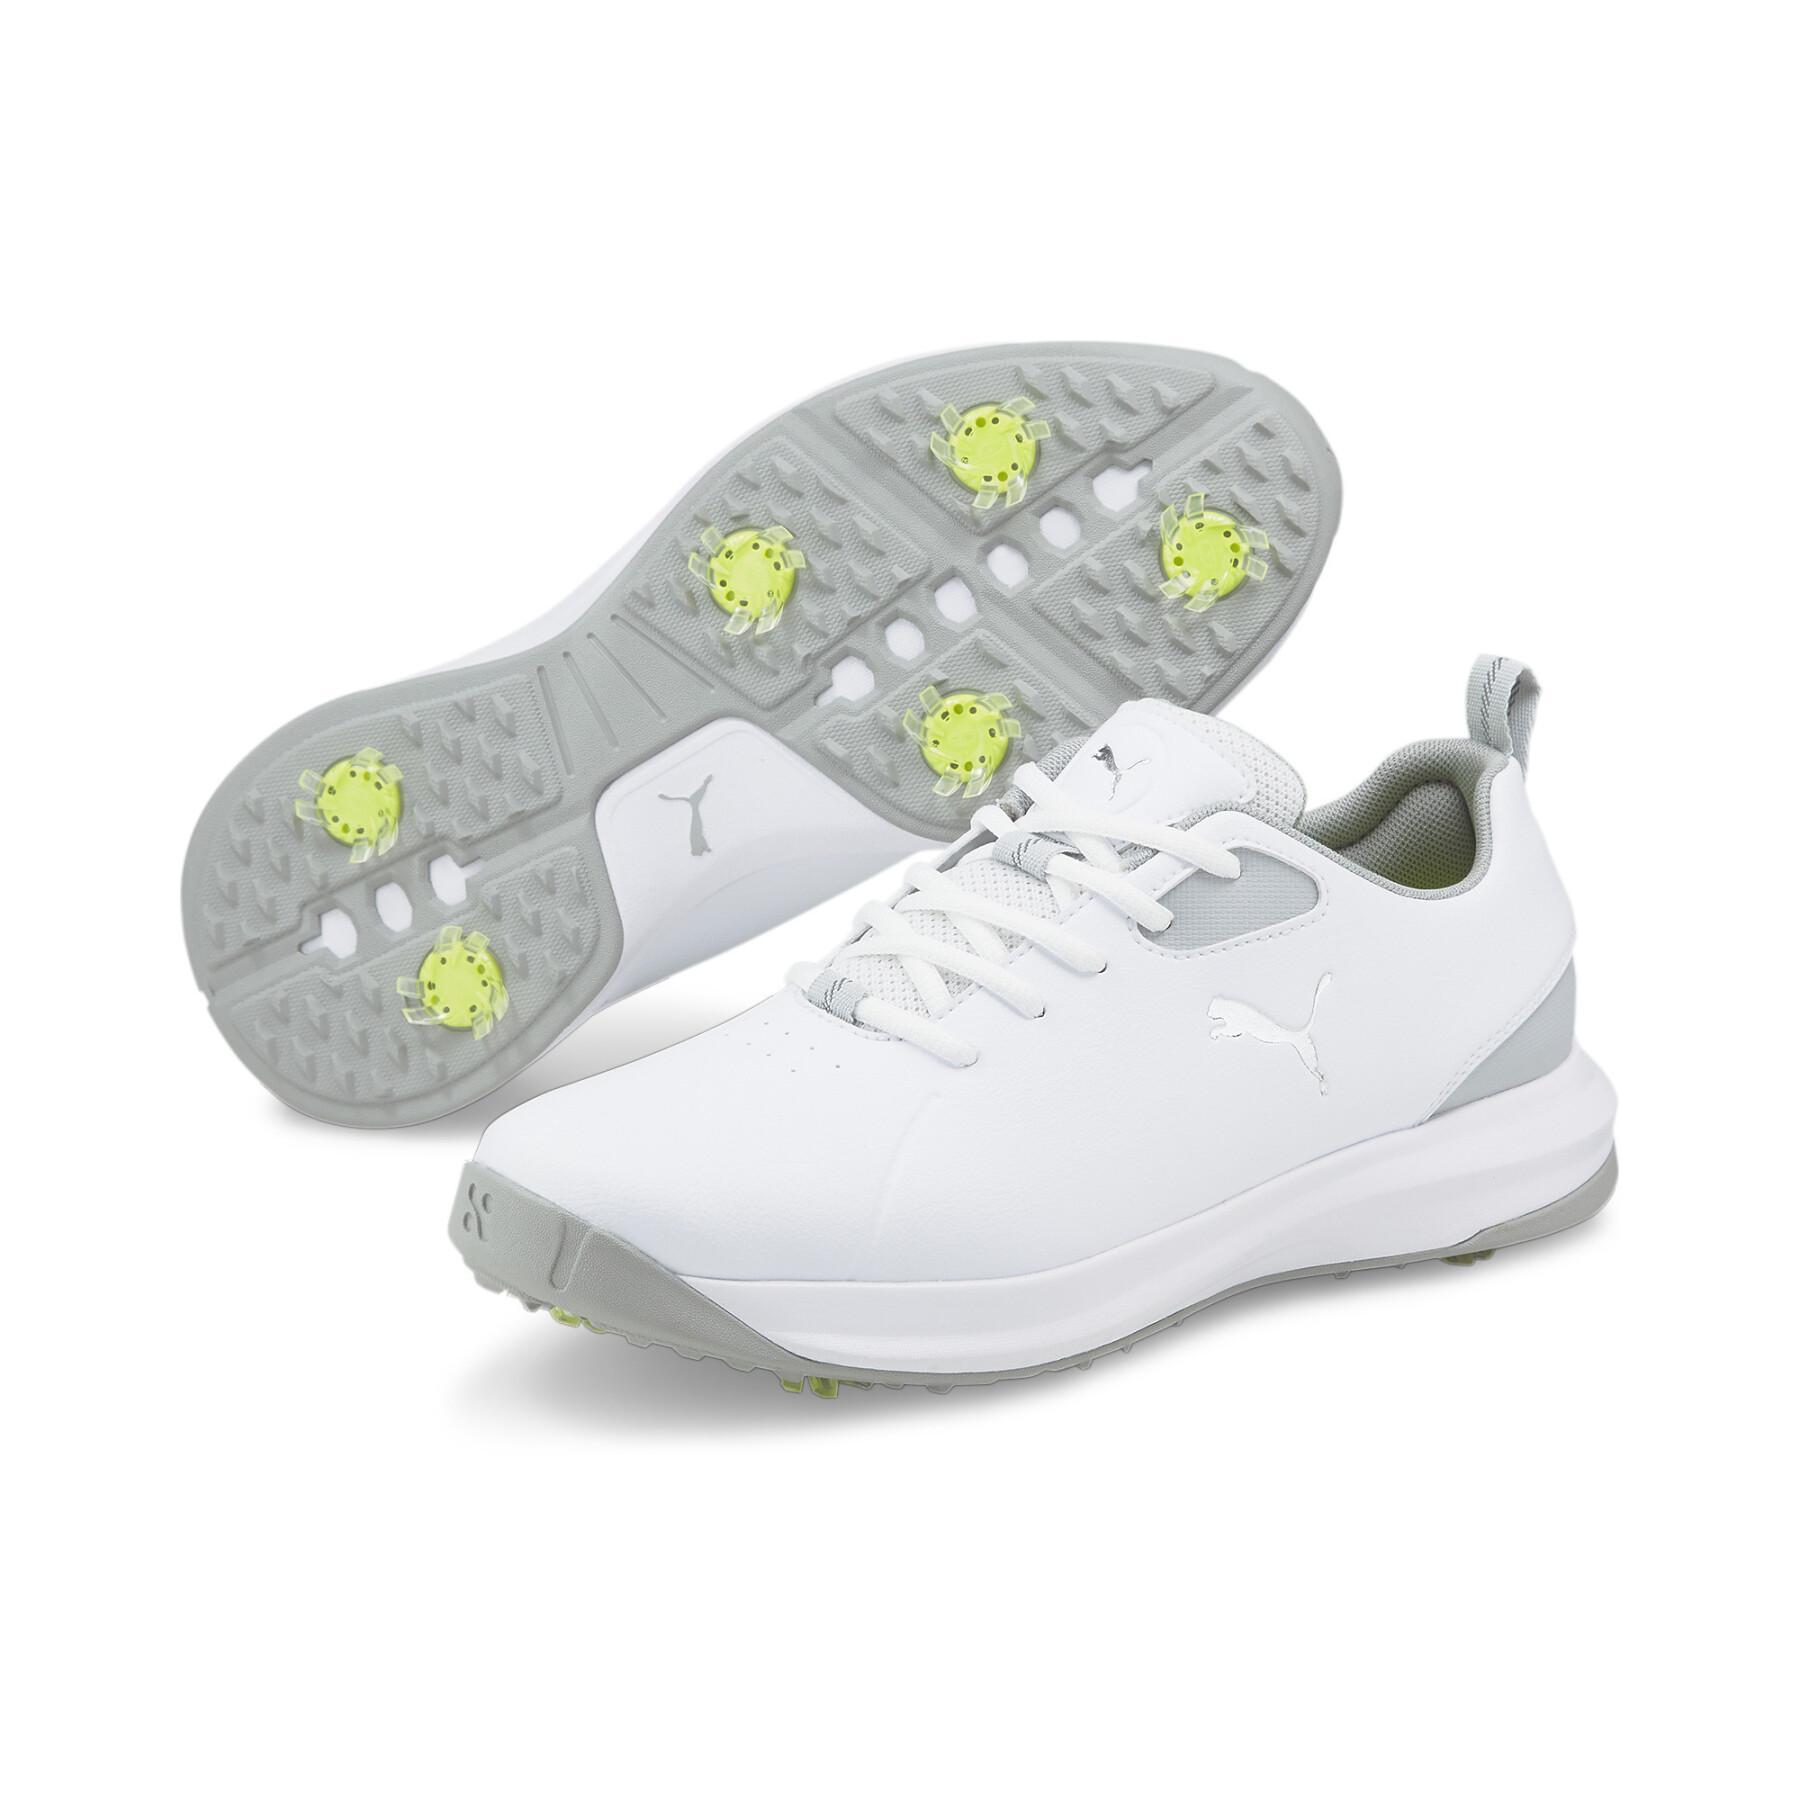 Chaussures de golf avec crampons Puma Fusion FX Tech